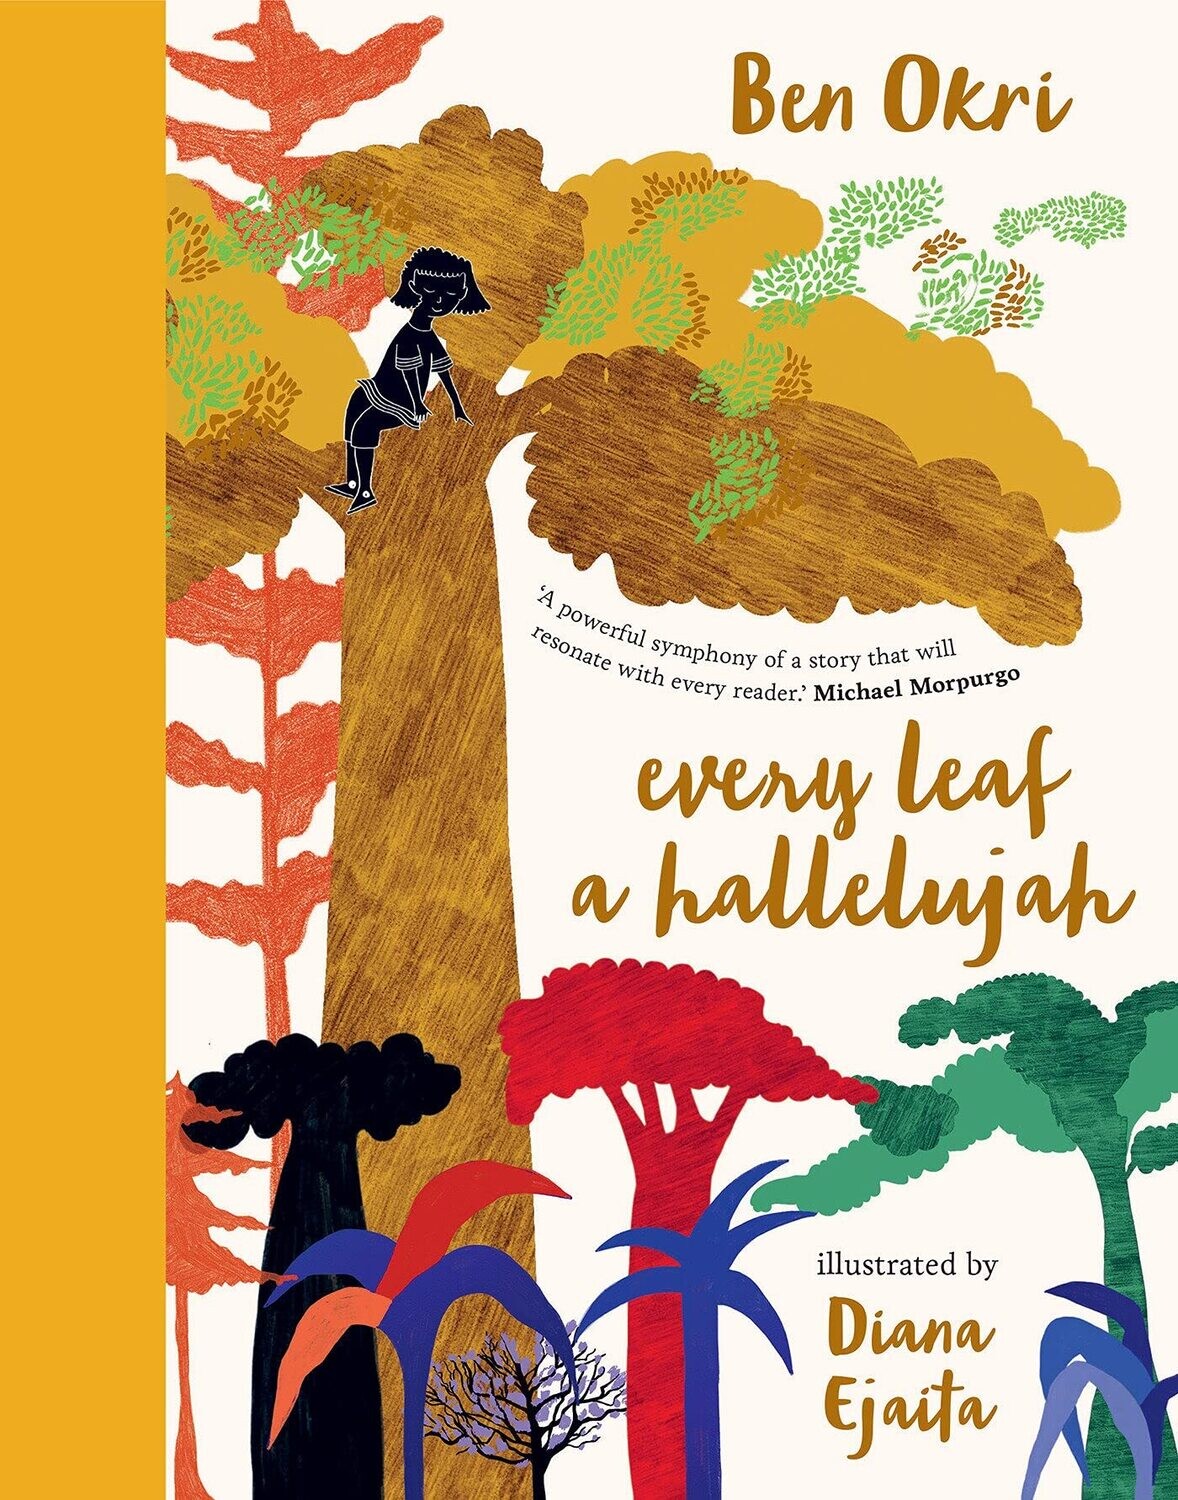 Every Leaf a Hallelujah by Ben Okri, illustrated by Diana Ejaita